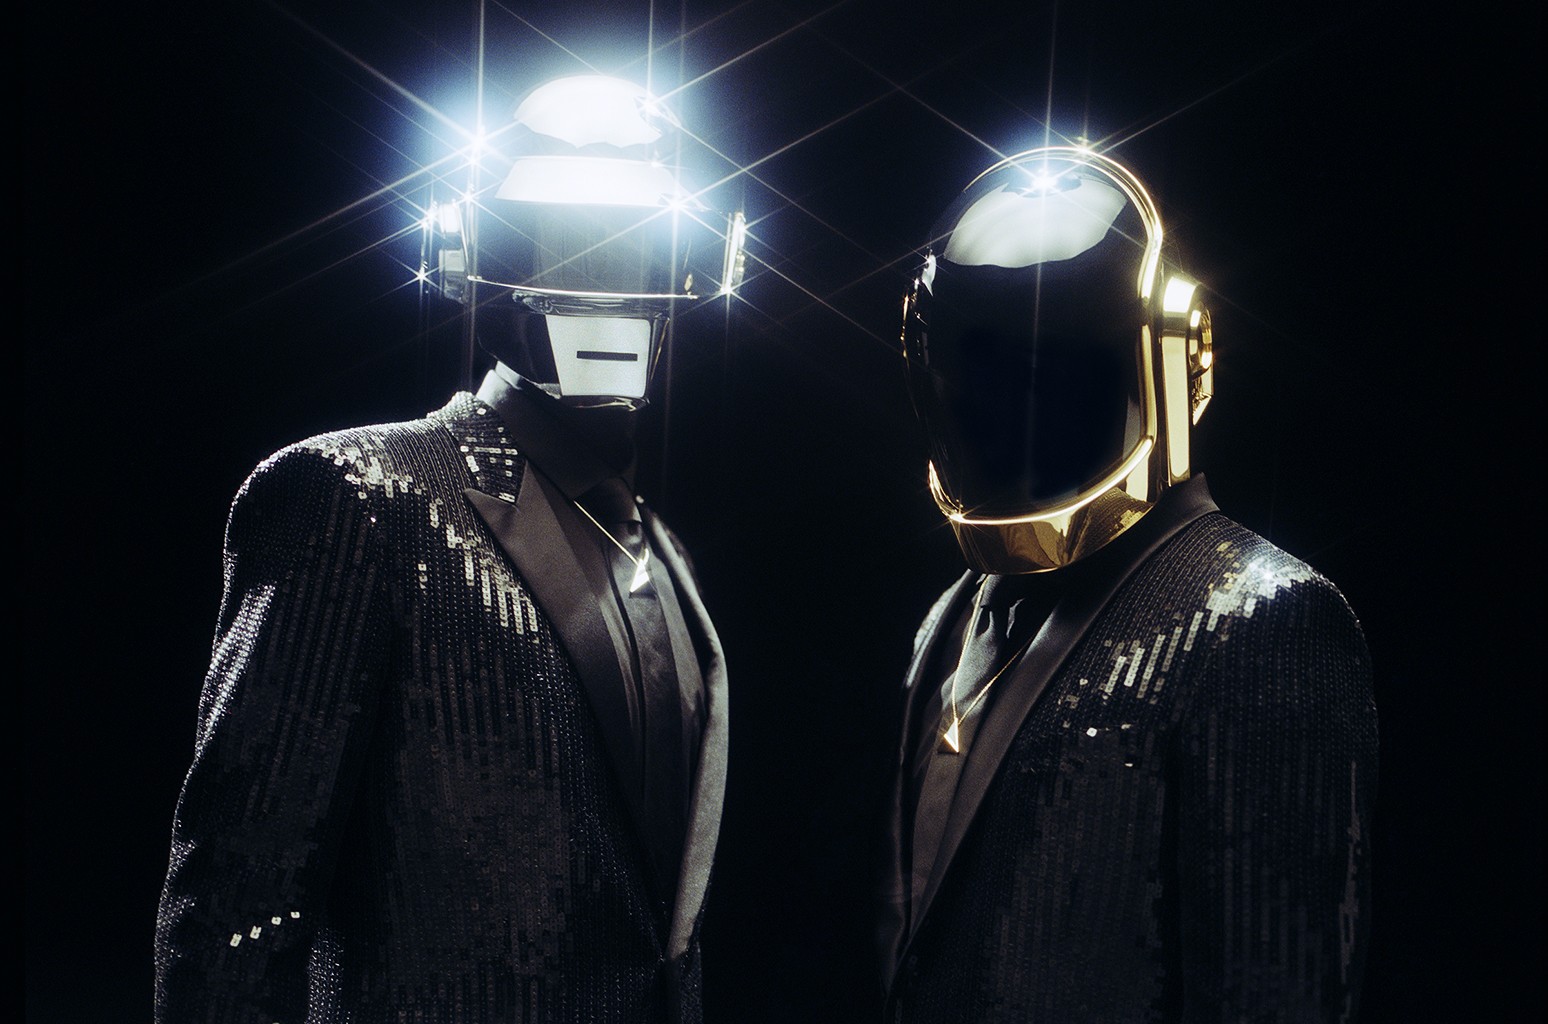 Daft Punk splits after 28 years together